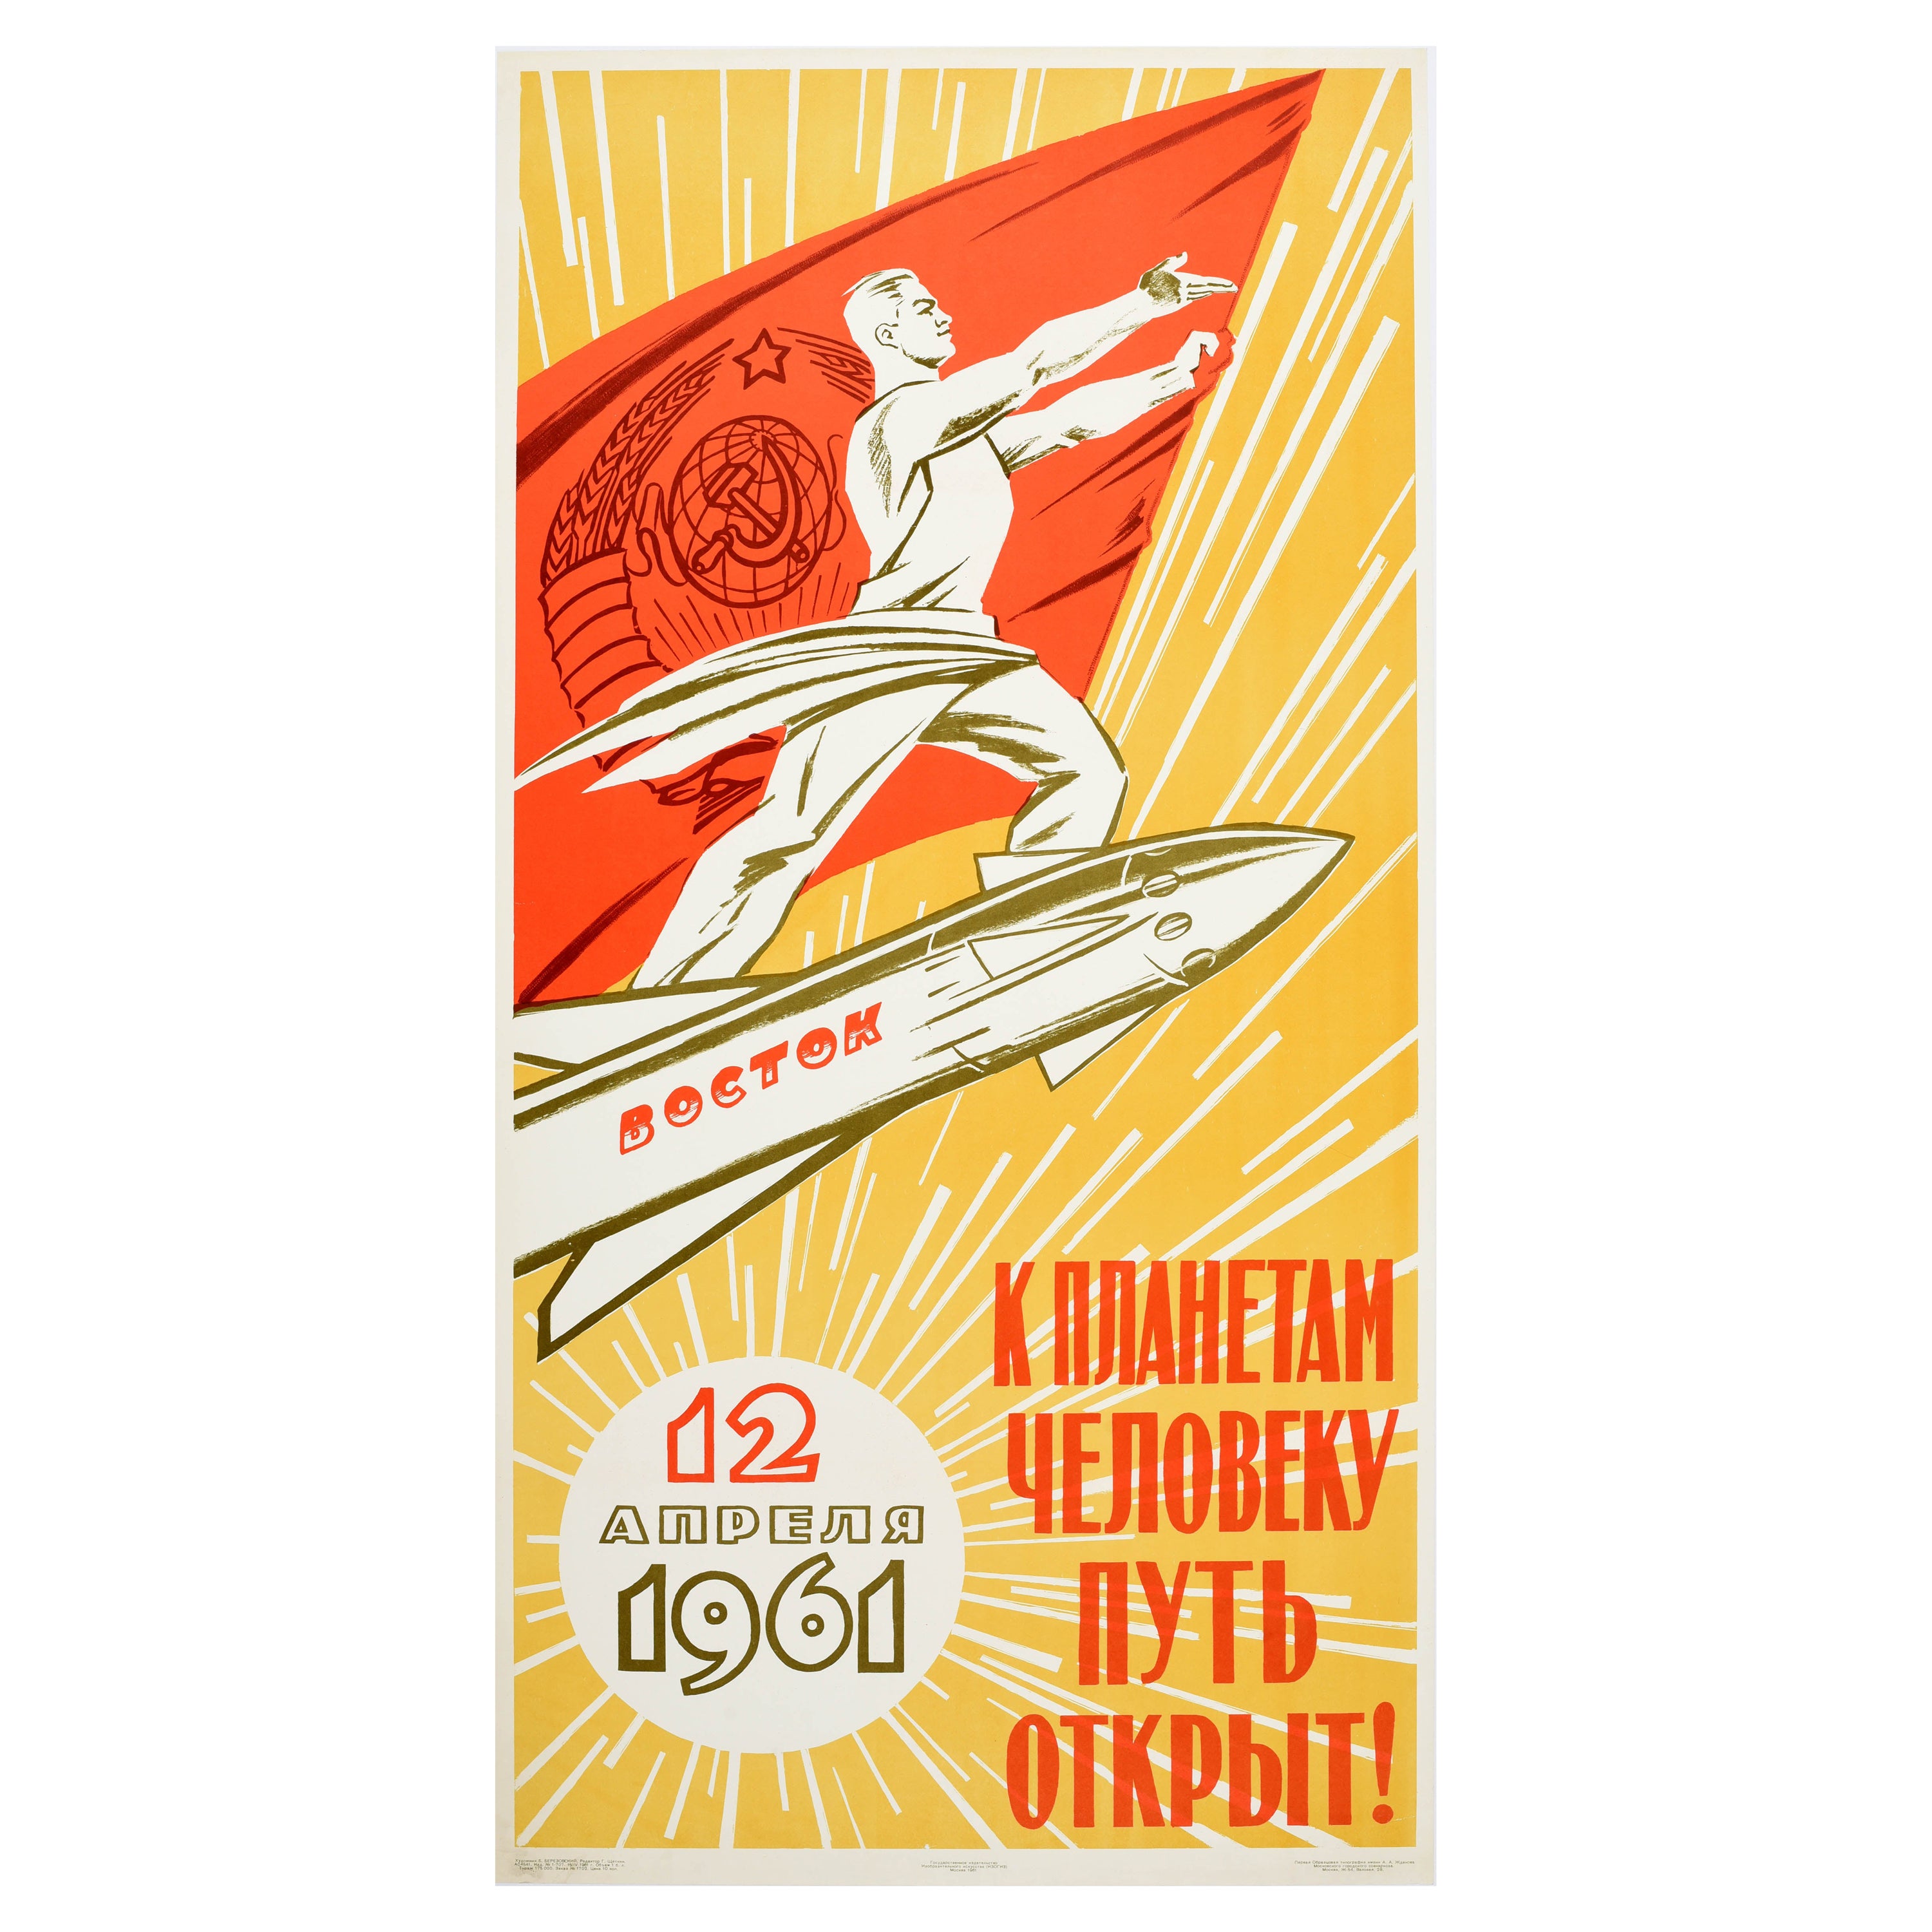 Original Vintage Poster Space Travel Planets Open To Mankind USSR Gagarin Vostok